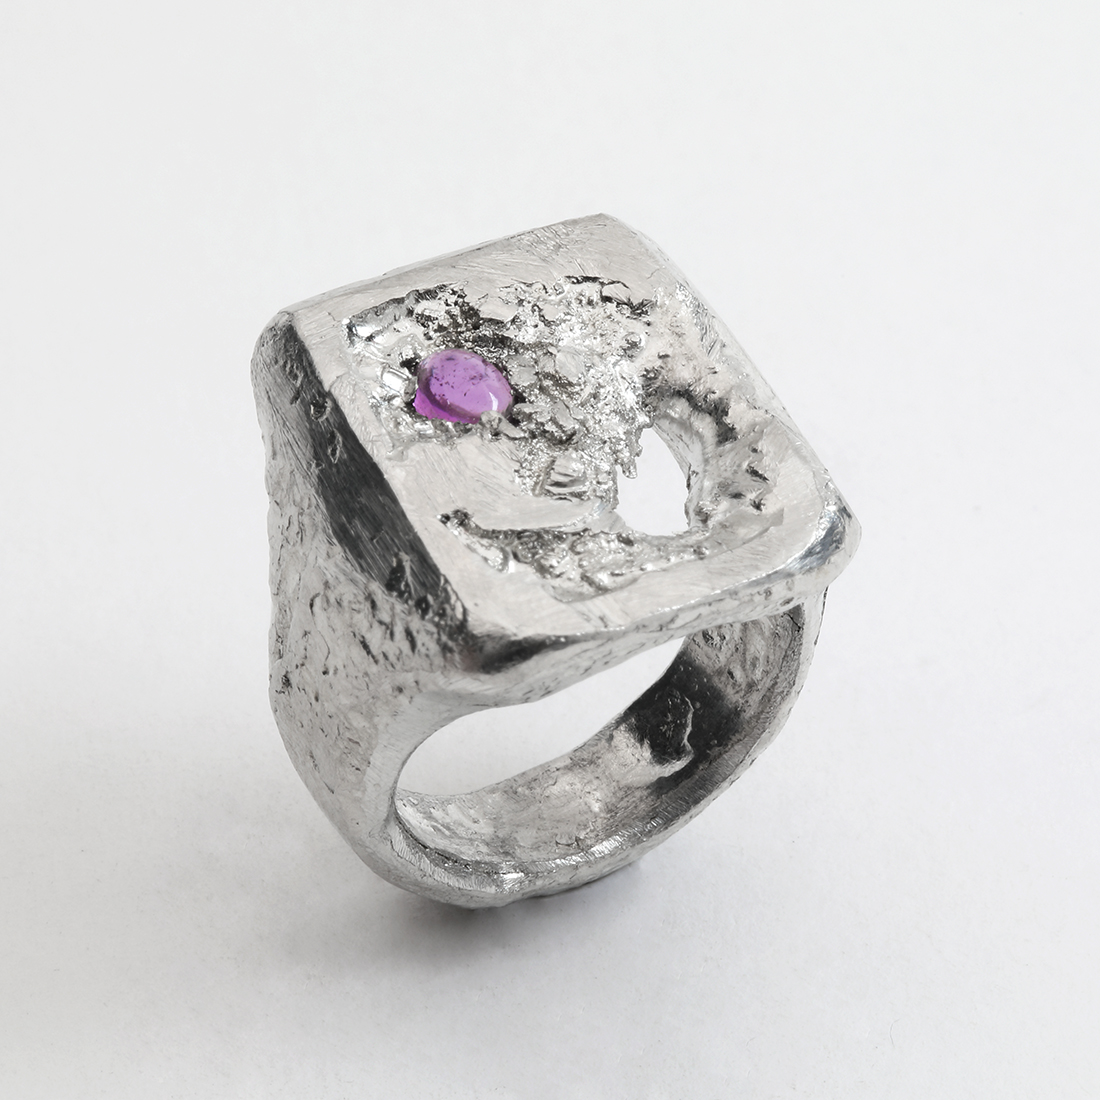 Ring shinny purple stone amethyst